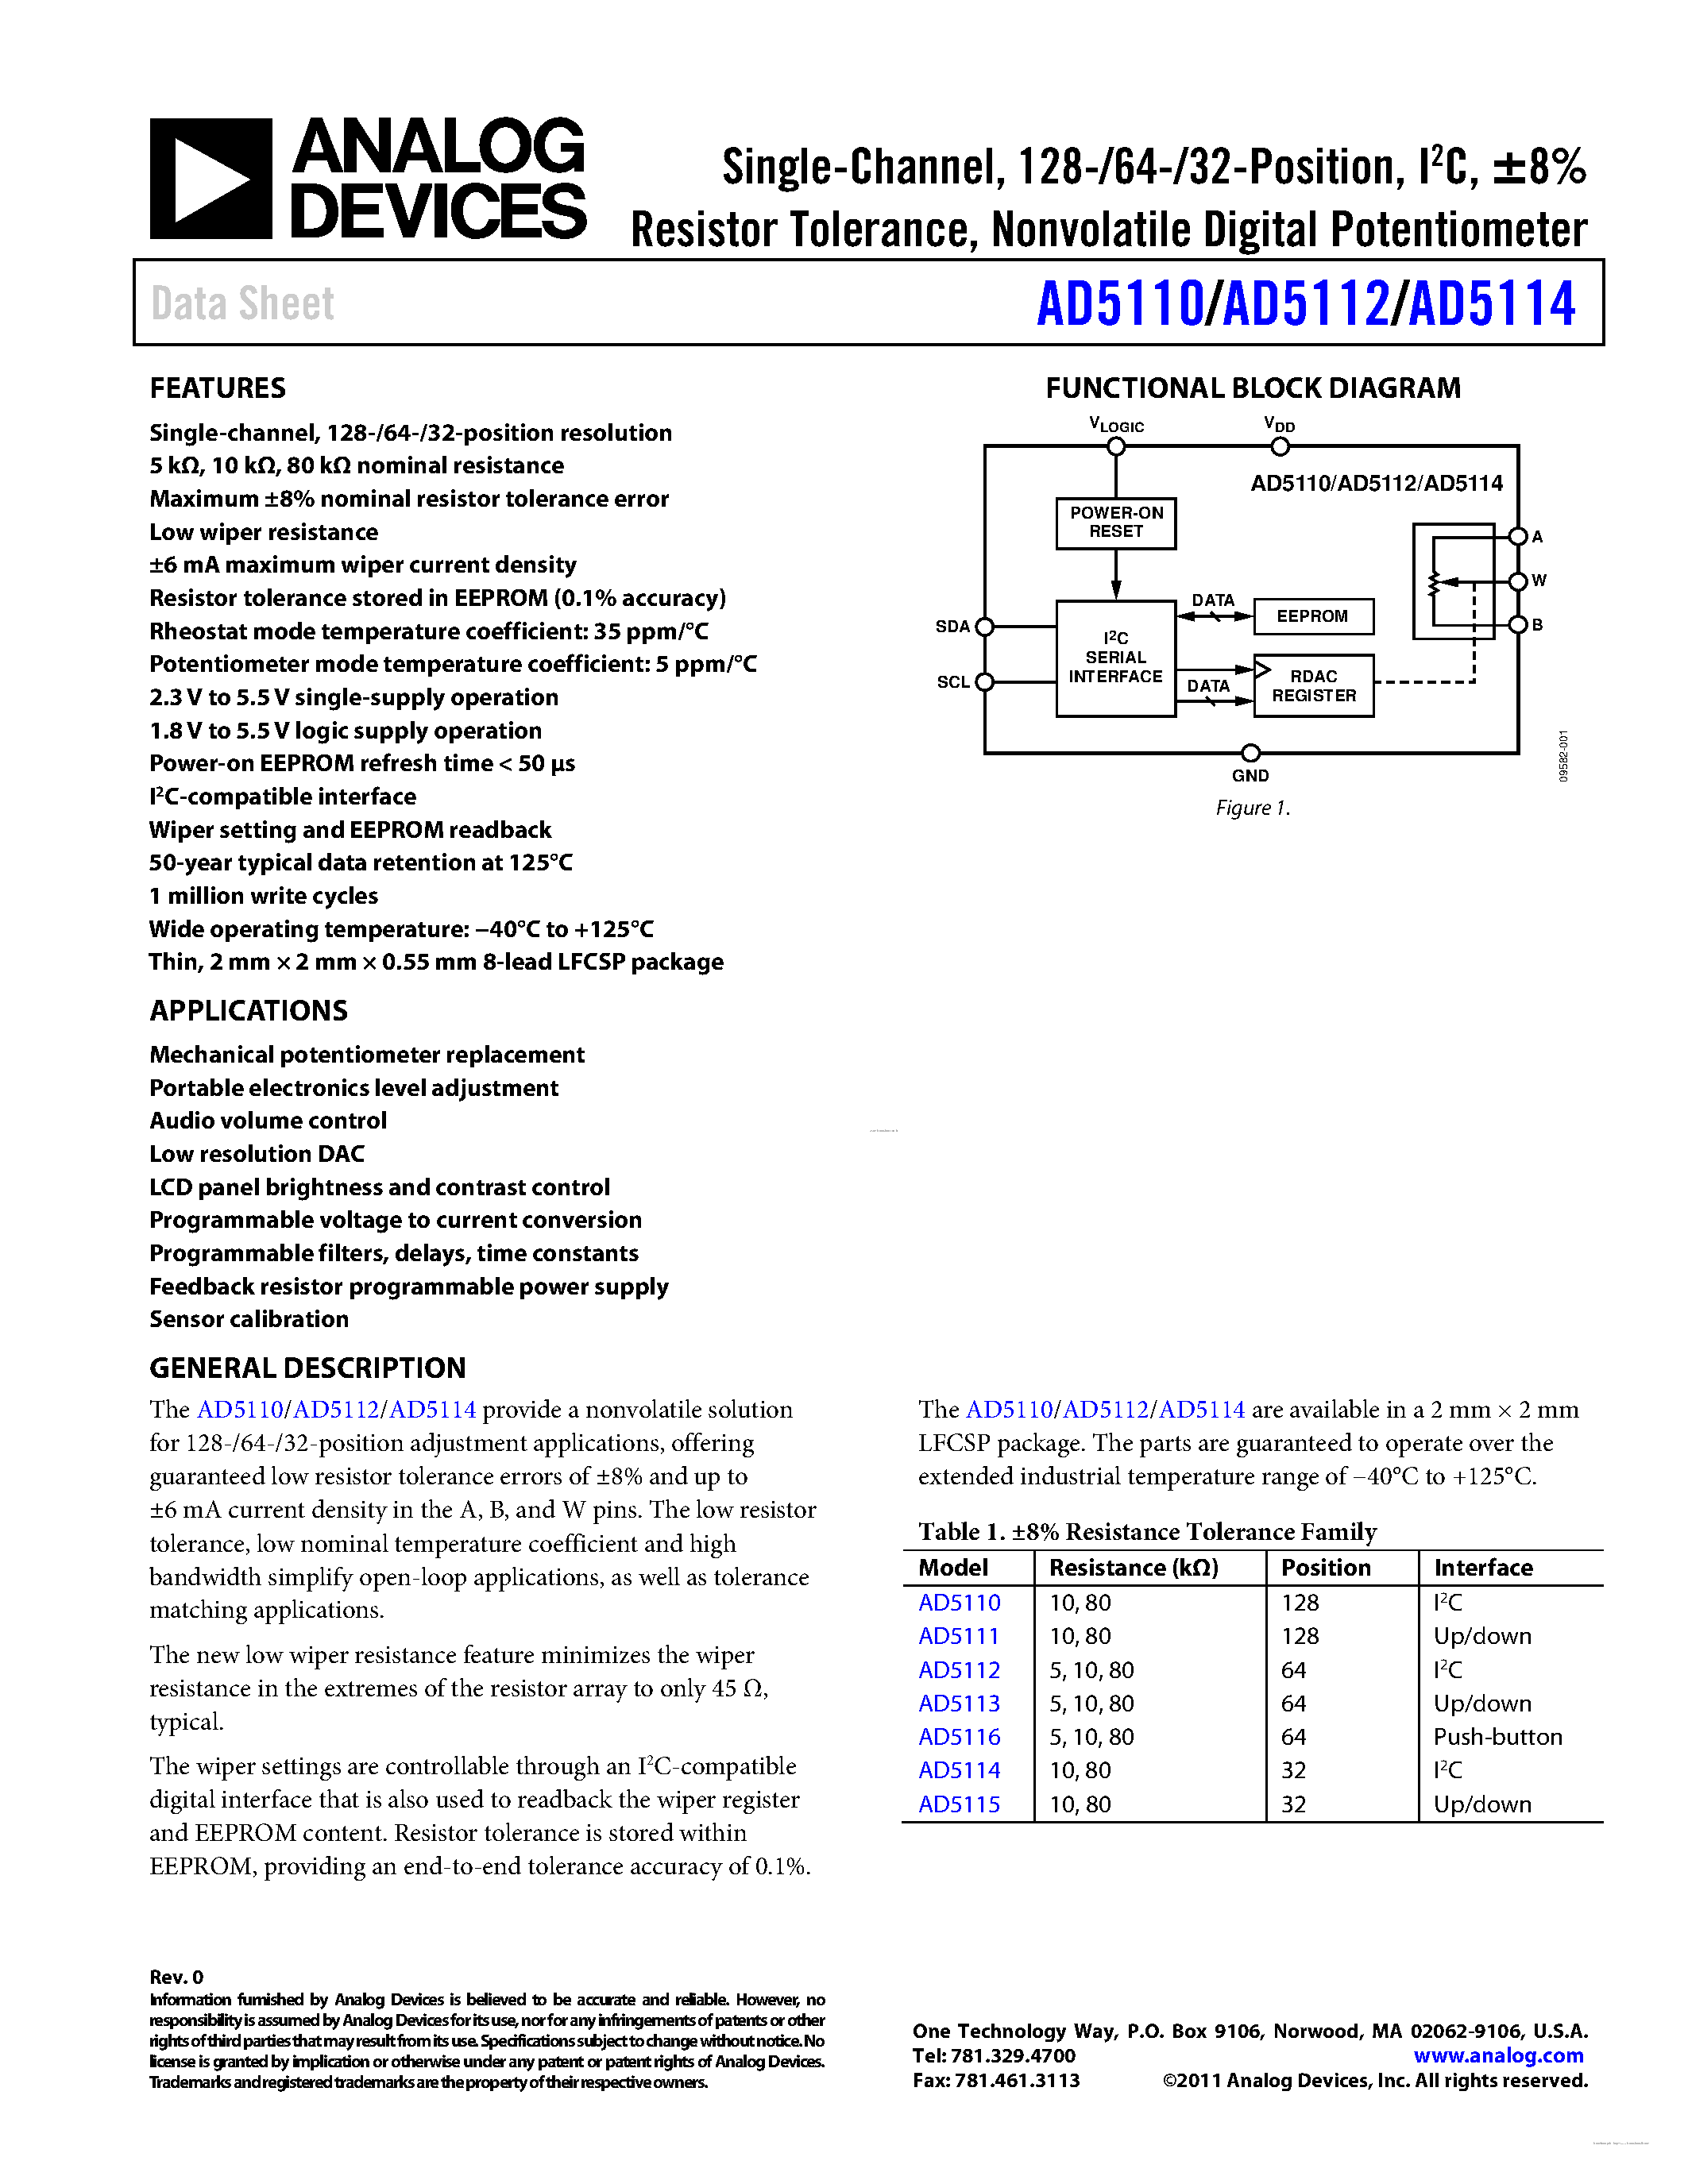 Datasheet AD5110 - (AD5110 - AD5114) Nonvolatile Digital Potentiometer page 1